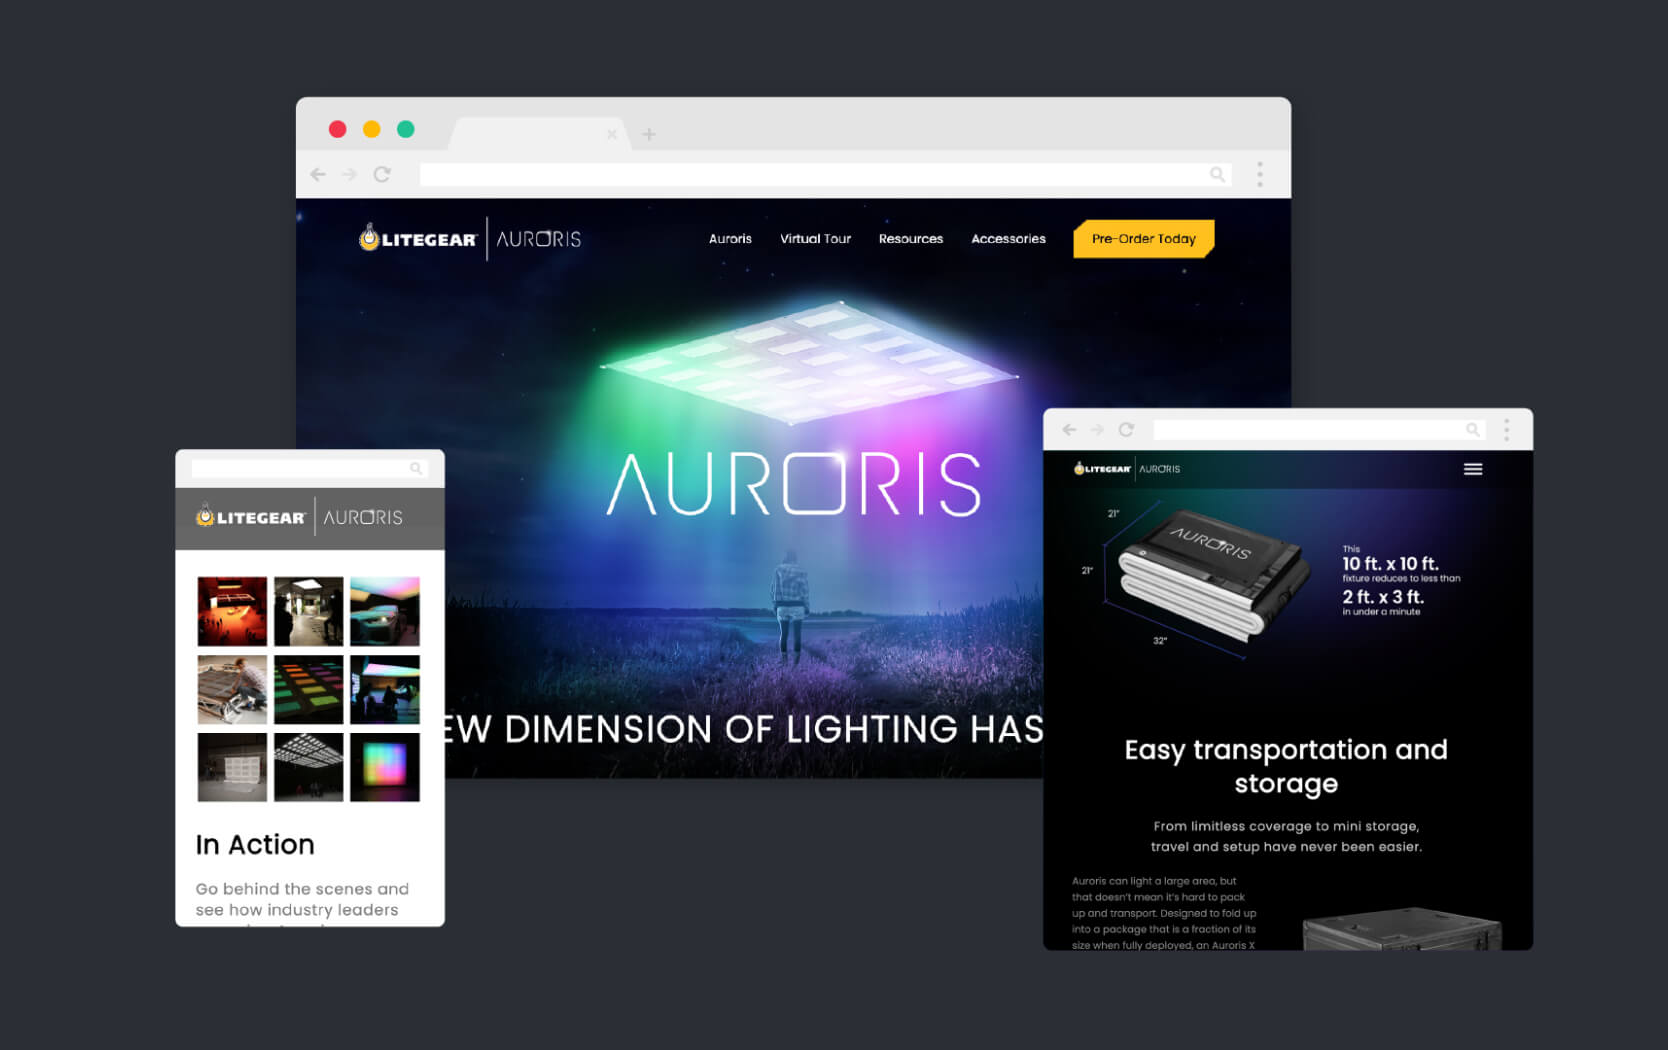 Litegear Auroris website image